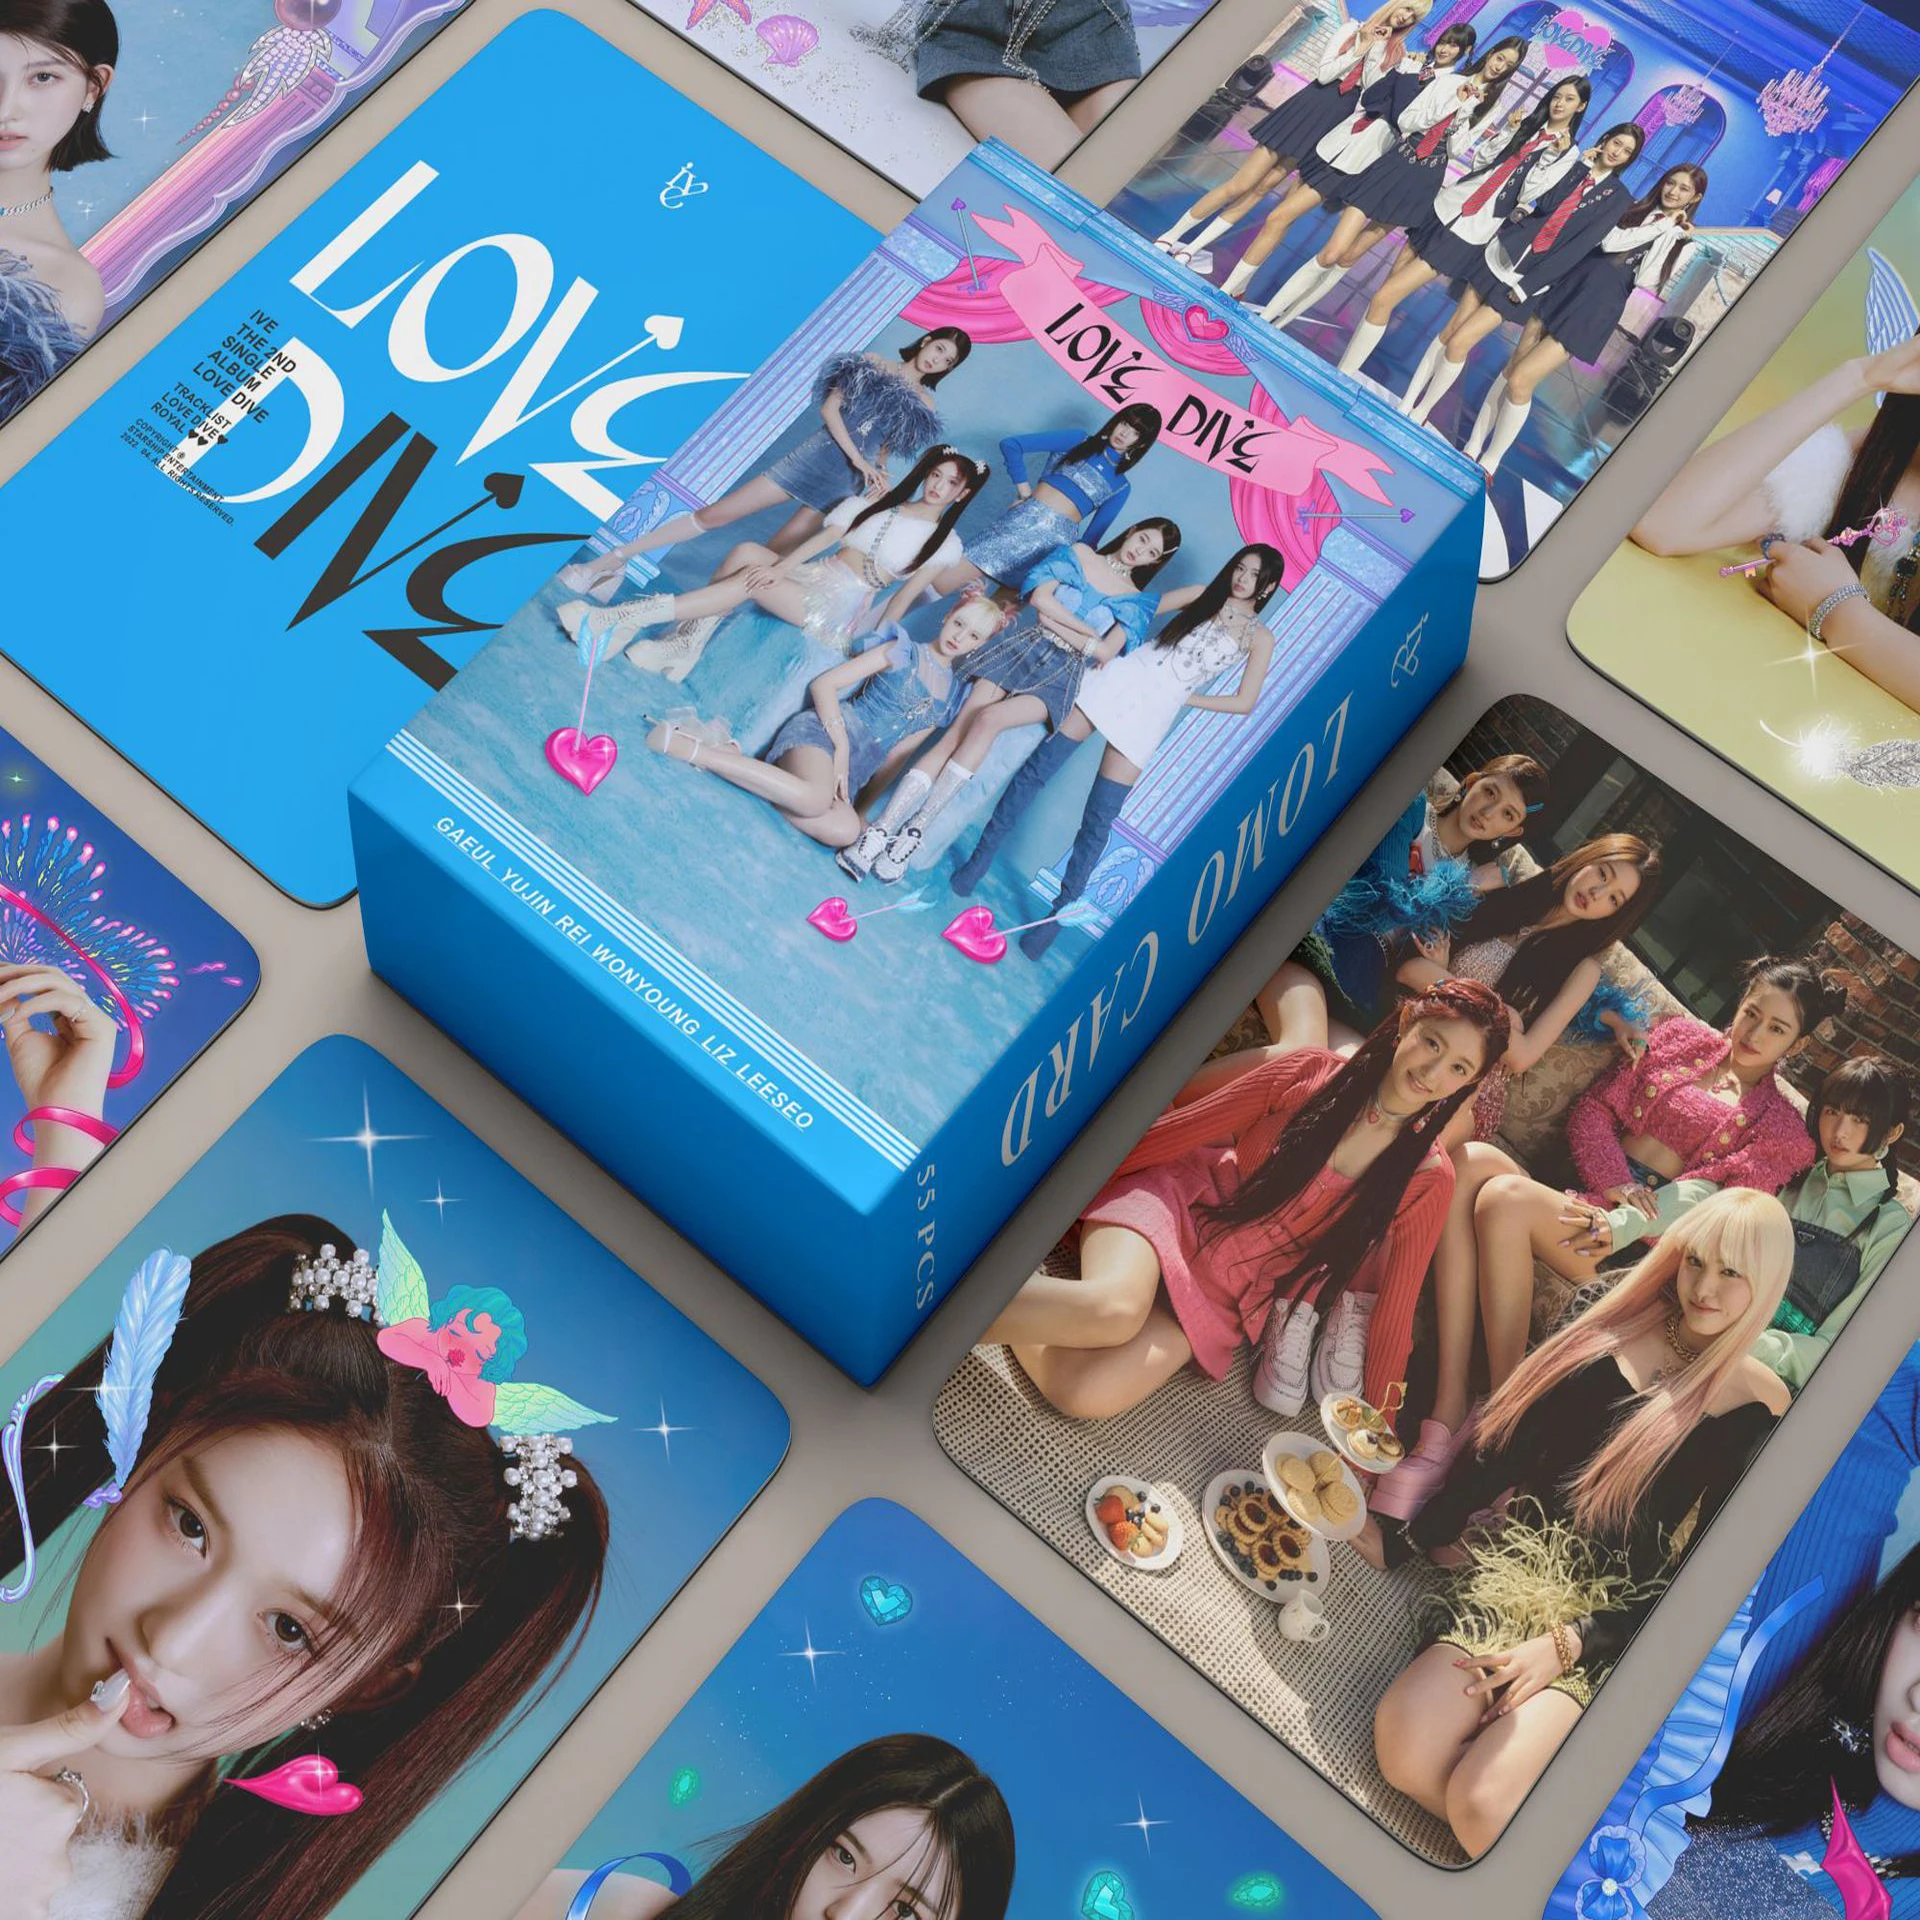 55pcs/set KPOP IVE LOVE DIVE ELEVEN Lomo Cards Photocards Album LIZ Girls Group Eleven Fans Collection Gift Postcards Photo Card